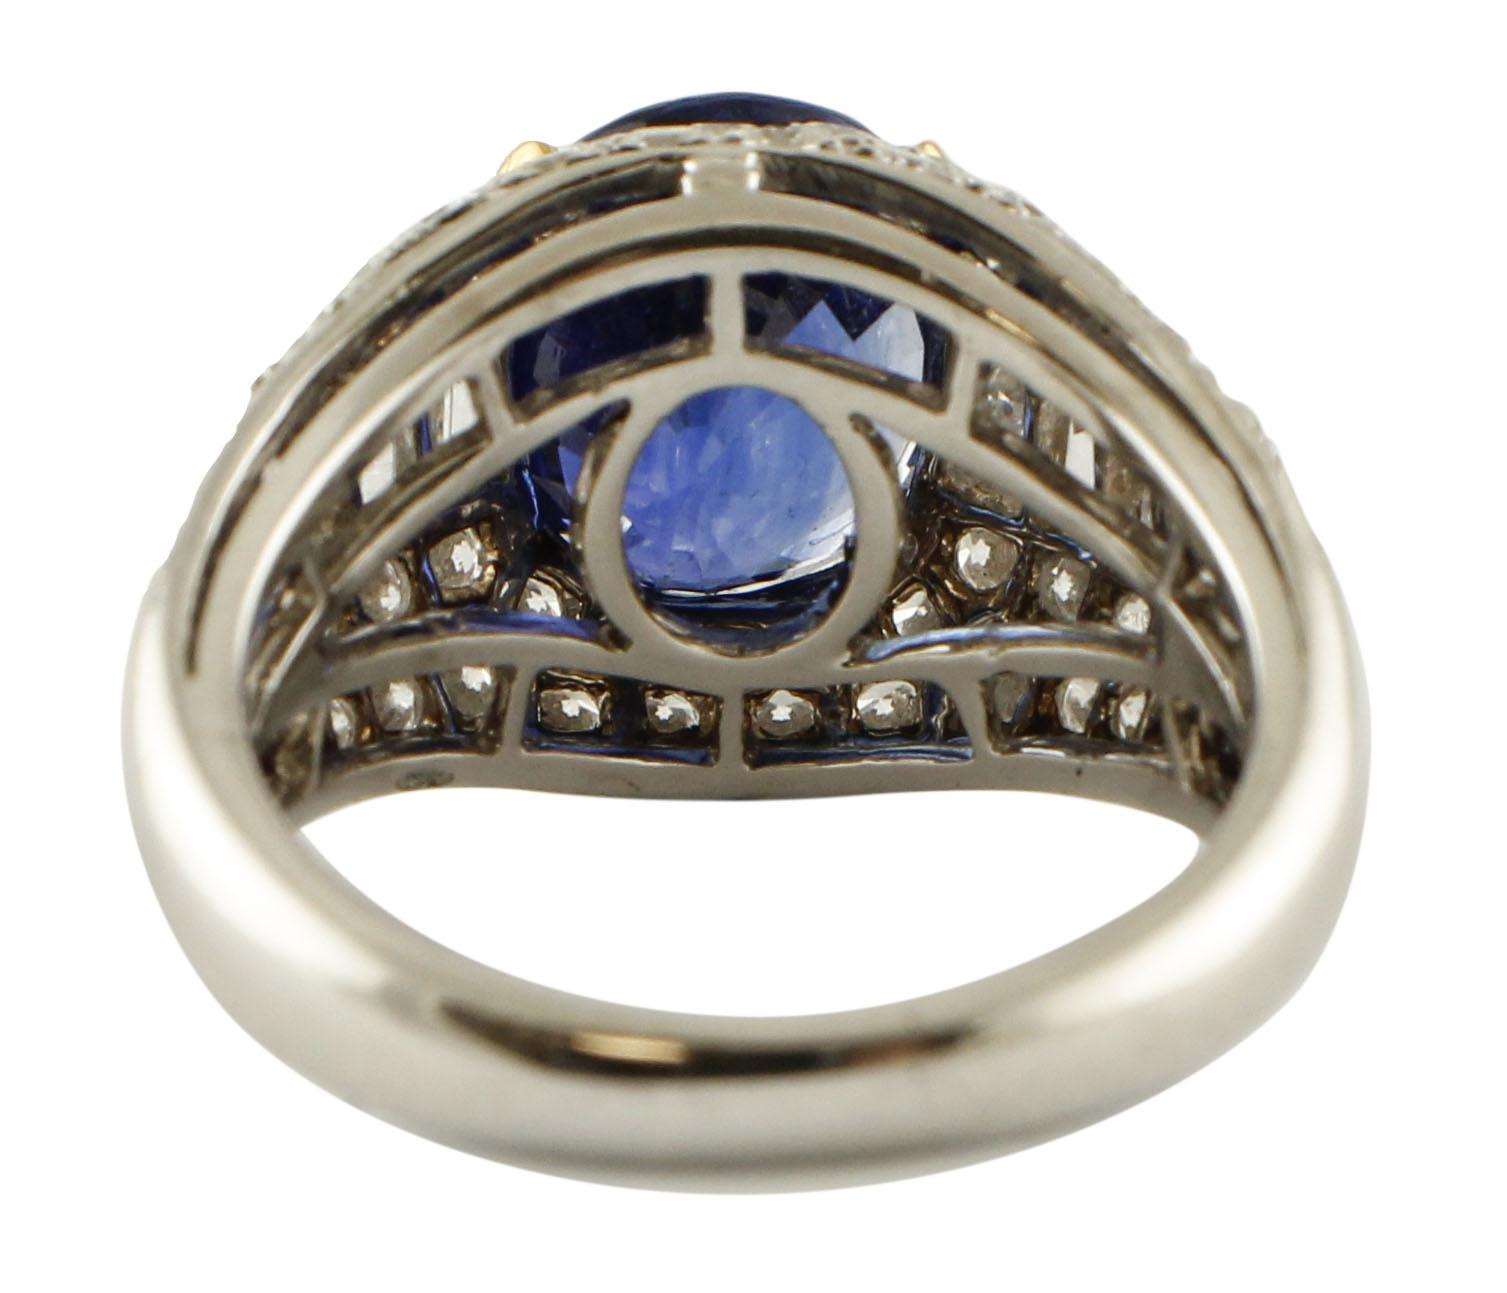 Mixed Cut Intense Blue Sapphire, Diamonds, 18 Karat White Gold Cluster Ring